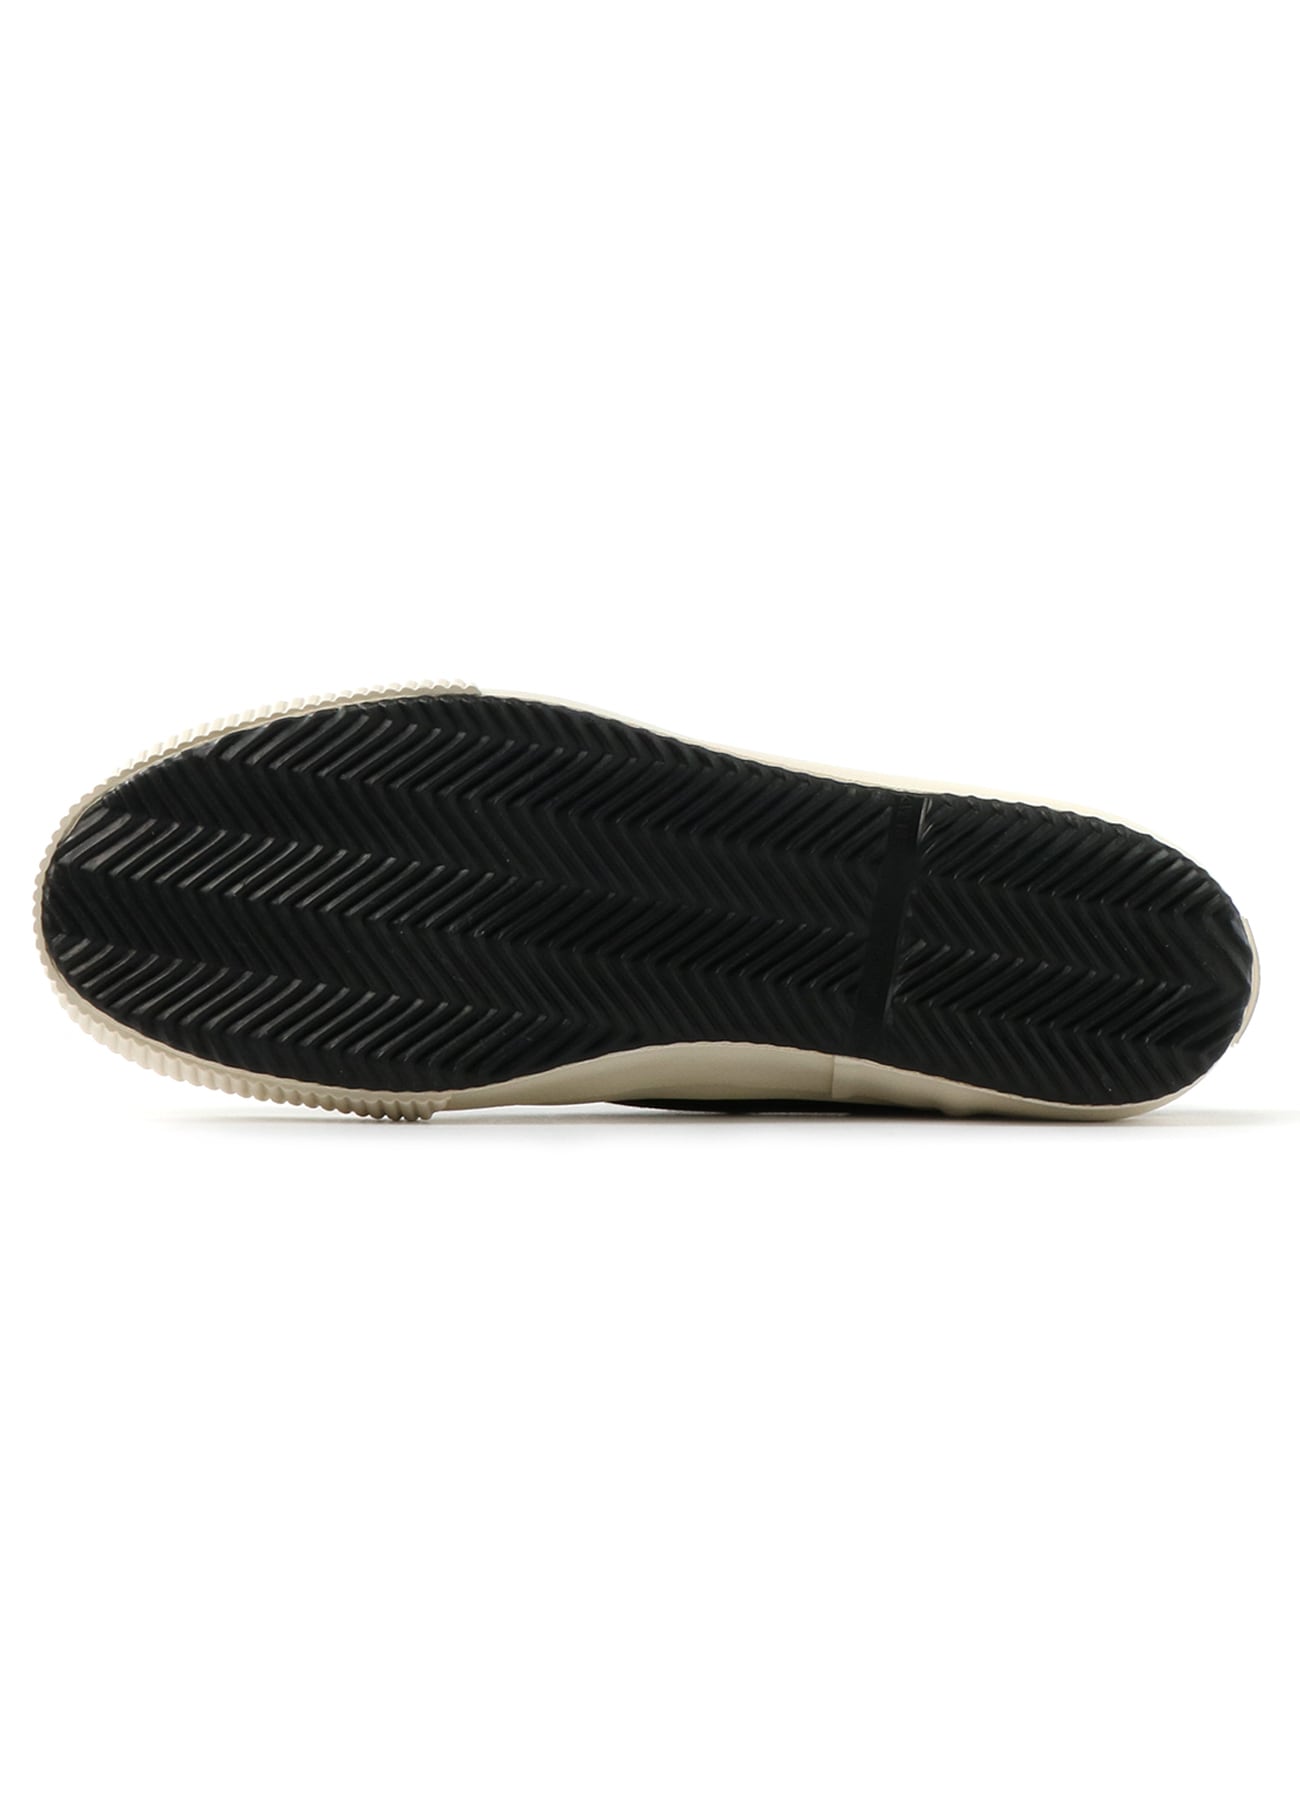 cotton canvas signature sneakers (US 5.5 Black): Y's | THE SHOP 